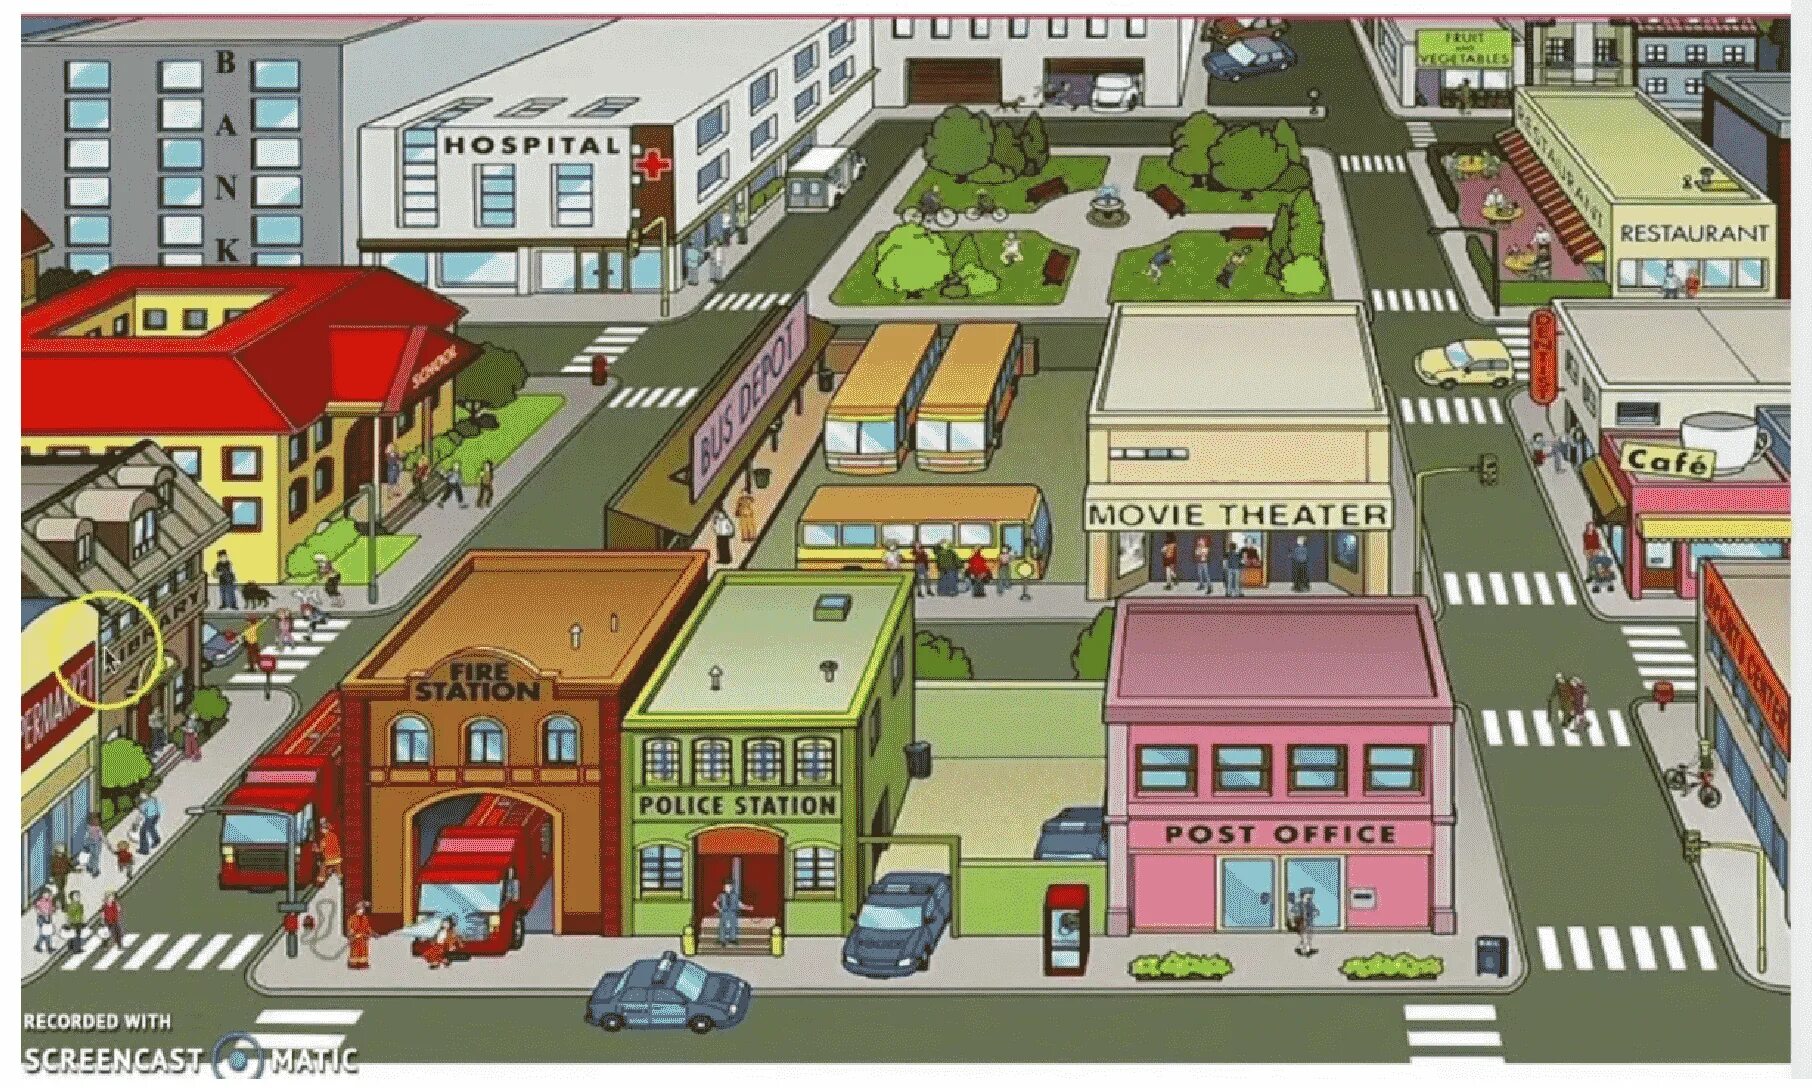 Places in Town для детей. Картинка города для описания. План города для детей. Здания на английском тема город. My house is the street